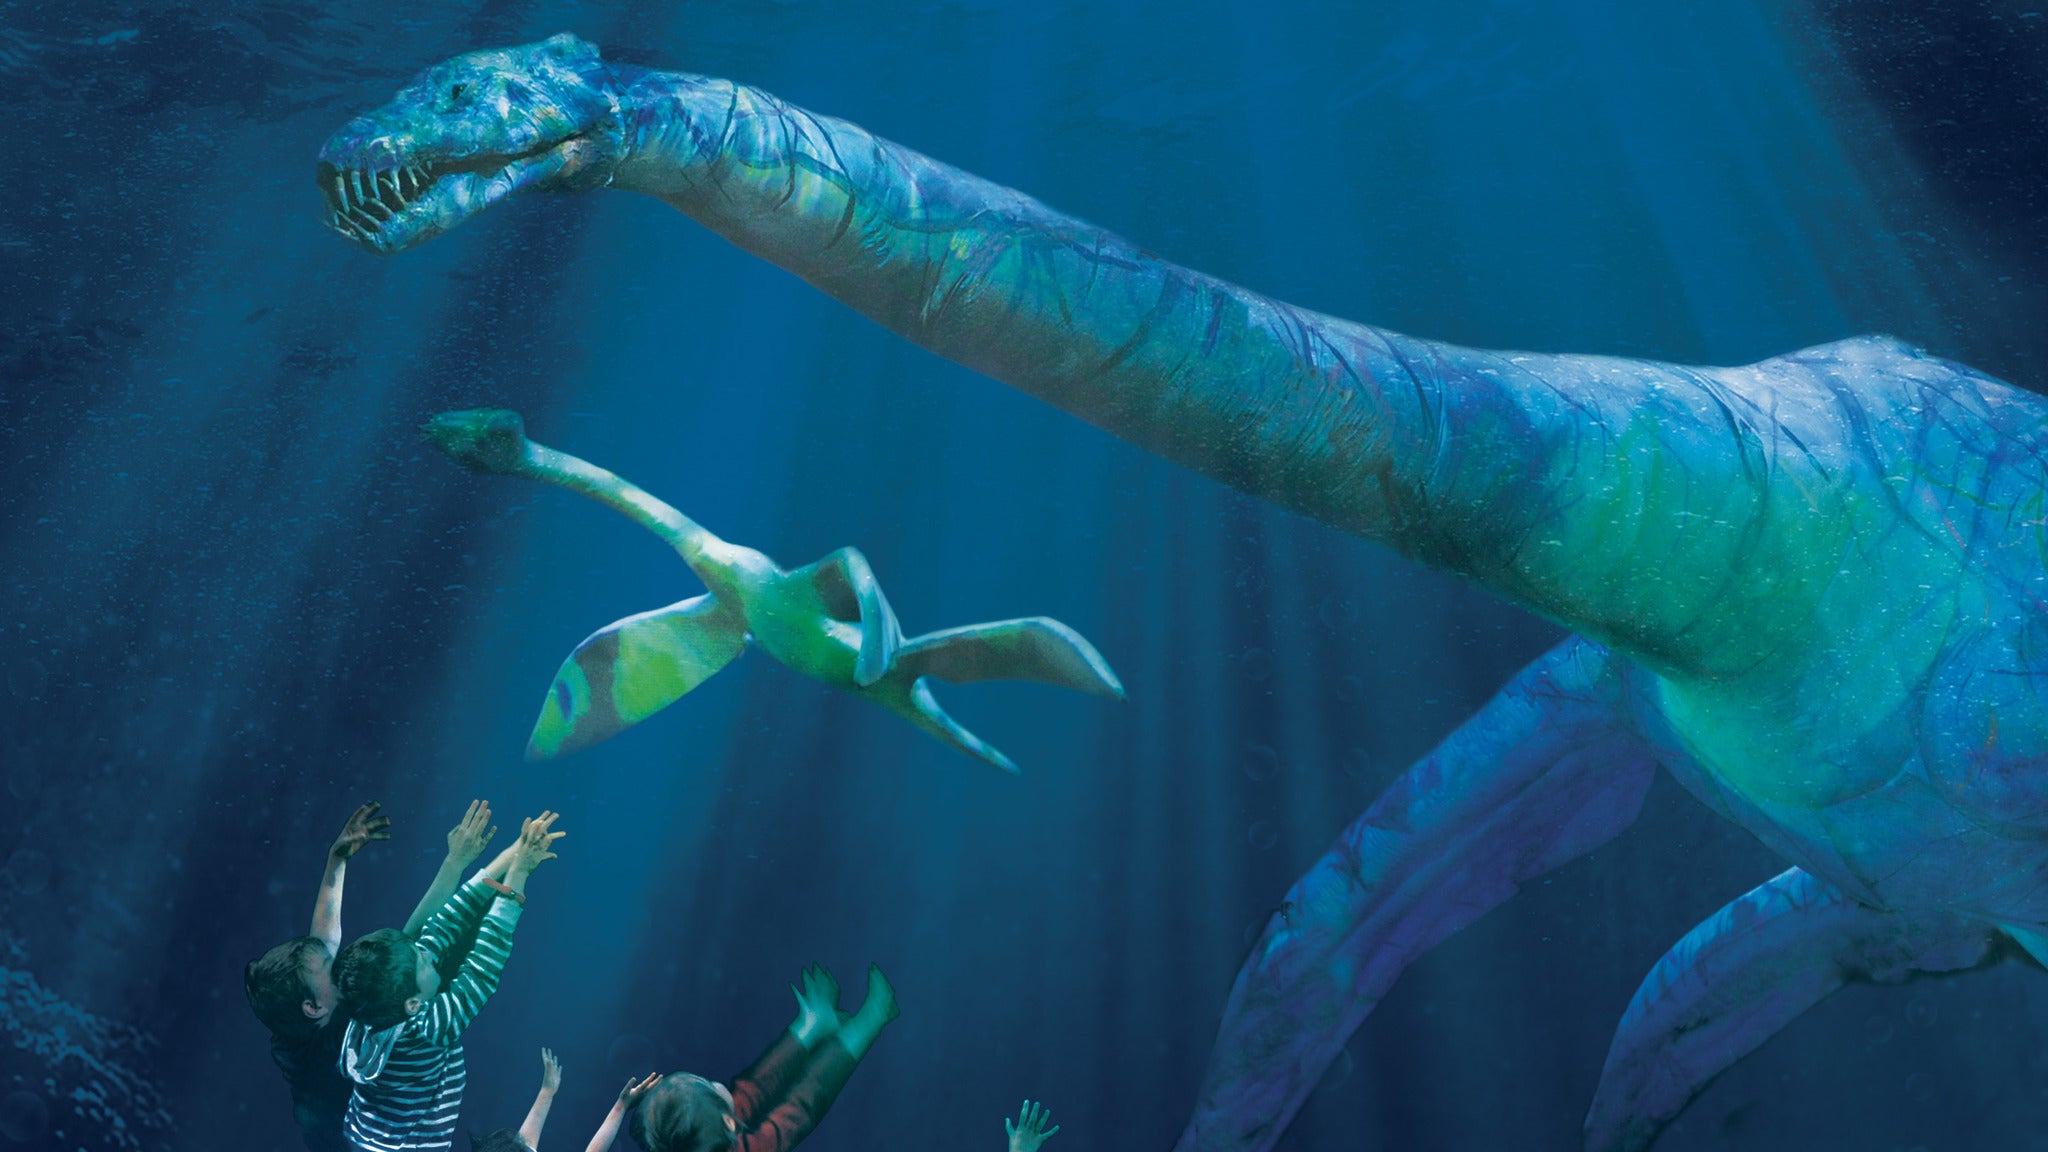 Erth's Prehistoric Aquarium Adventure in New Haven promo photo for Ticketmaster presale offer code